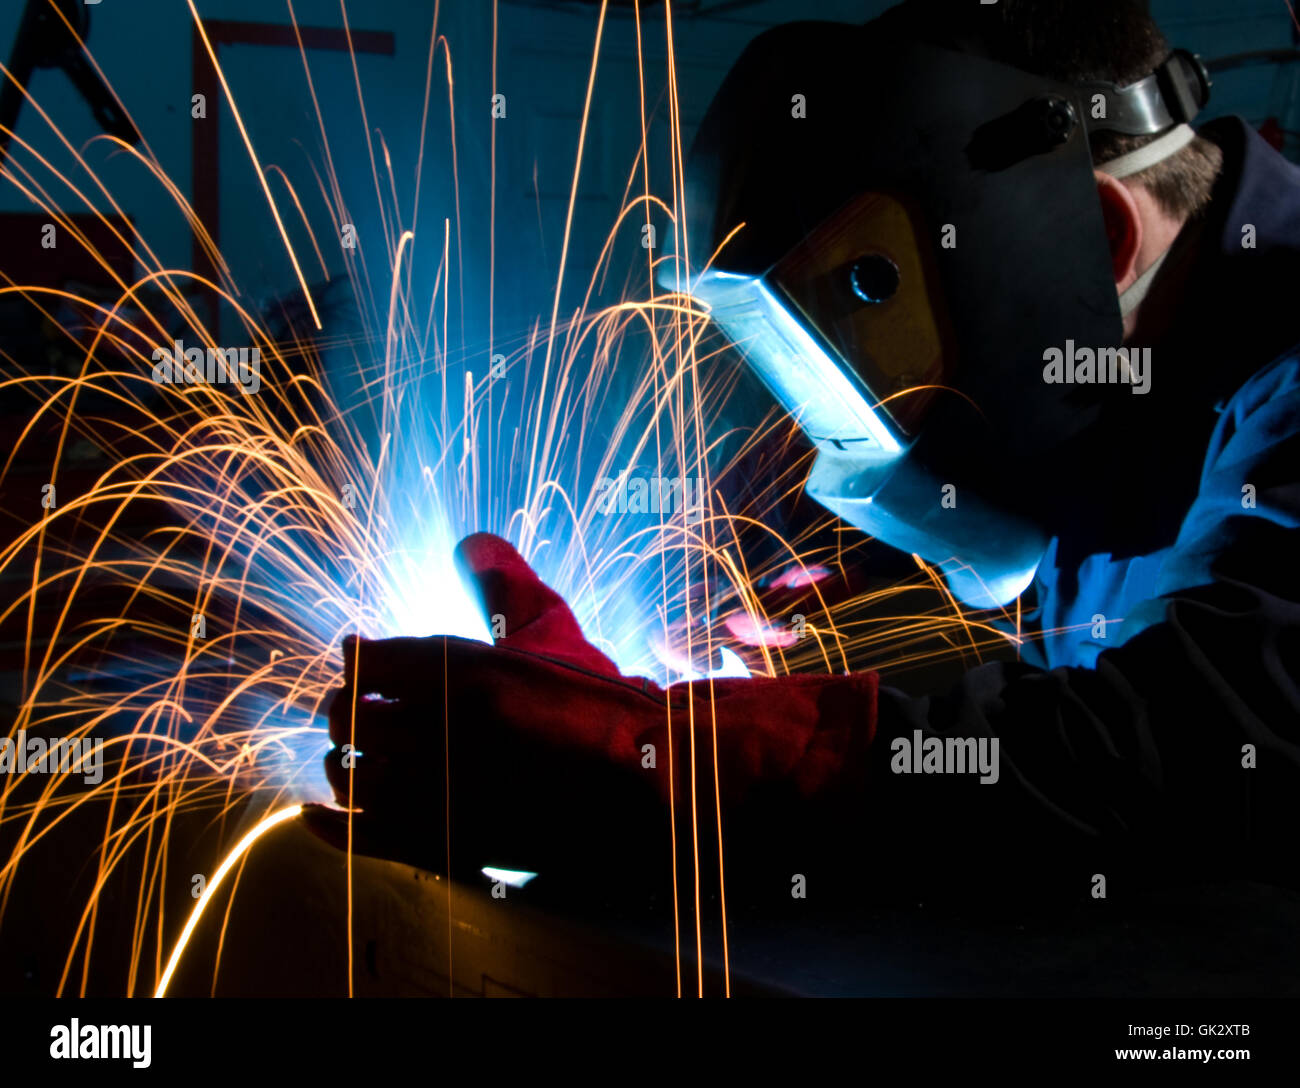 engineering manufacturing welding Stock Photo